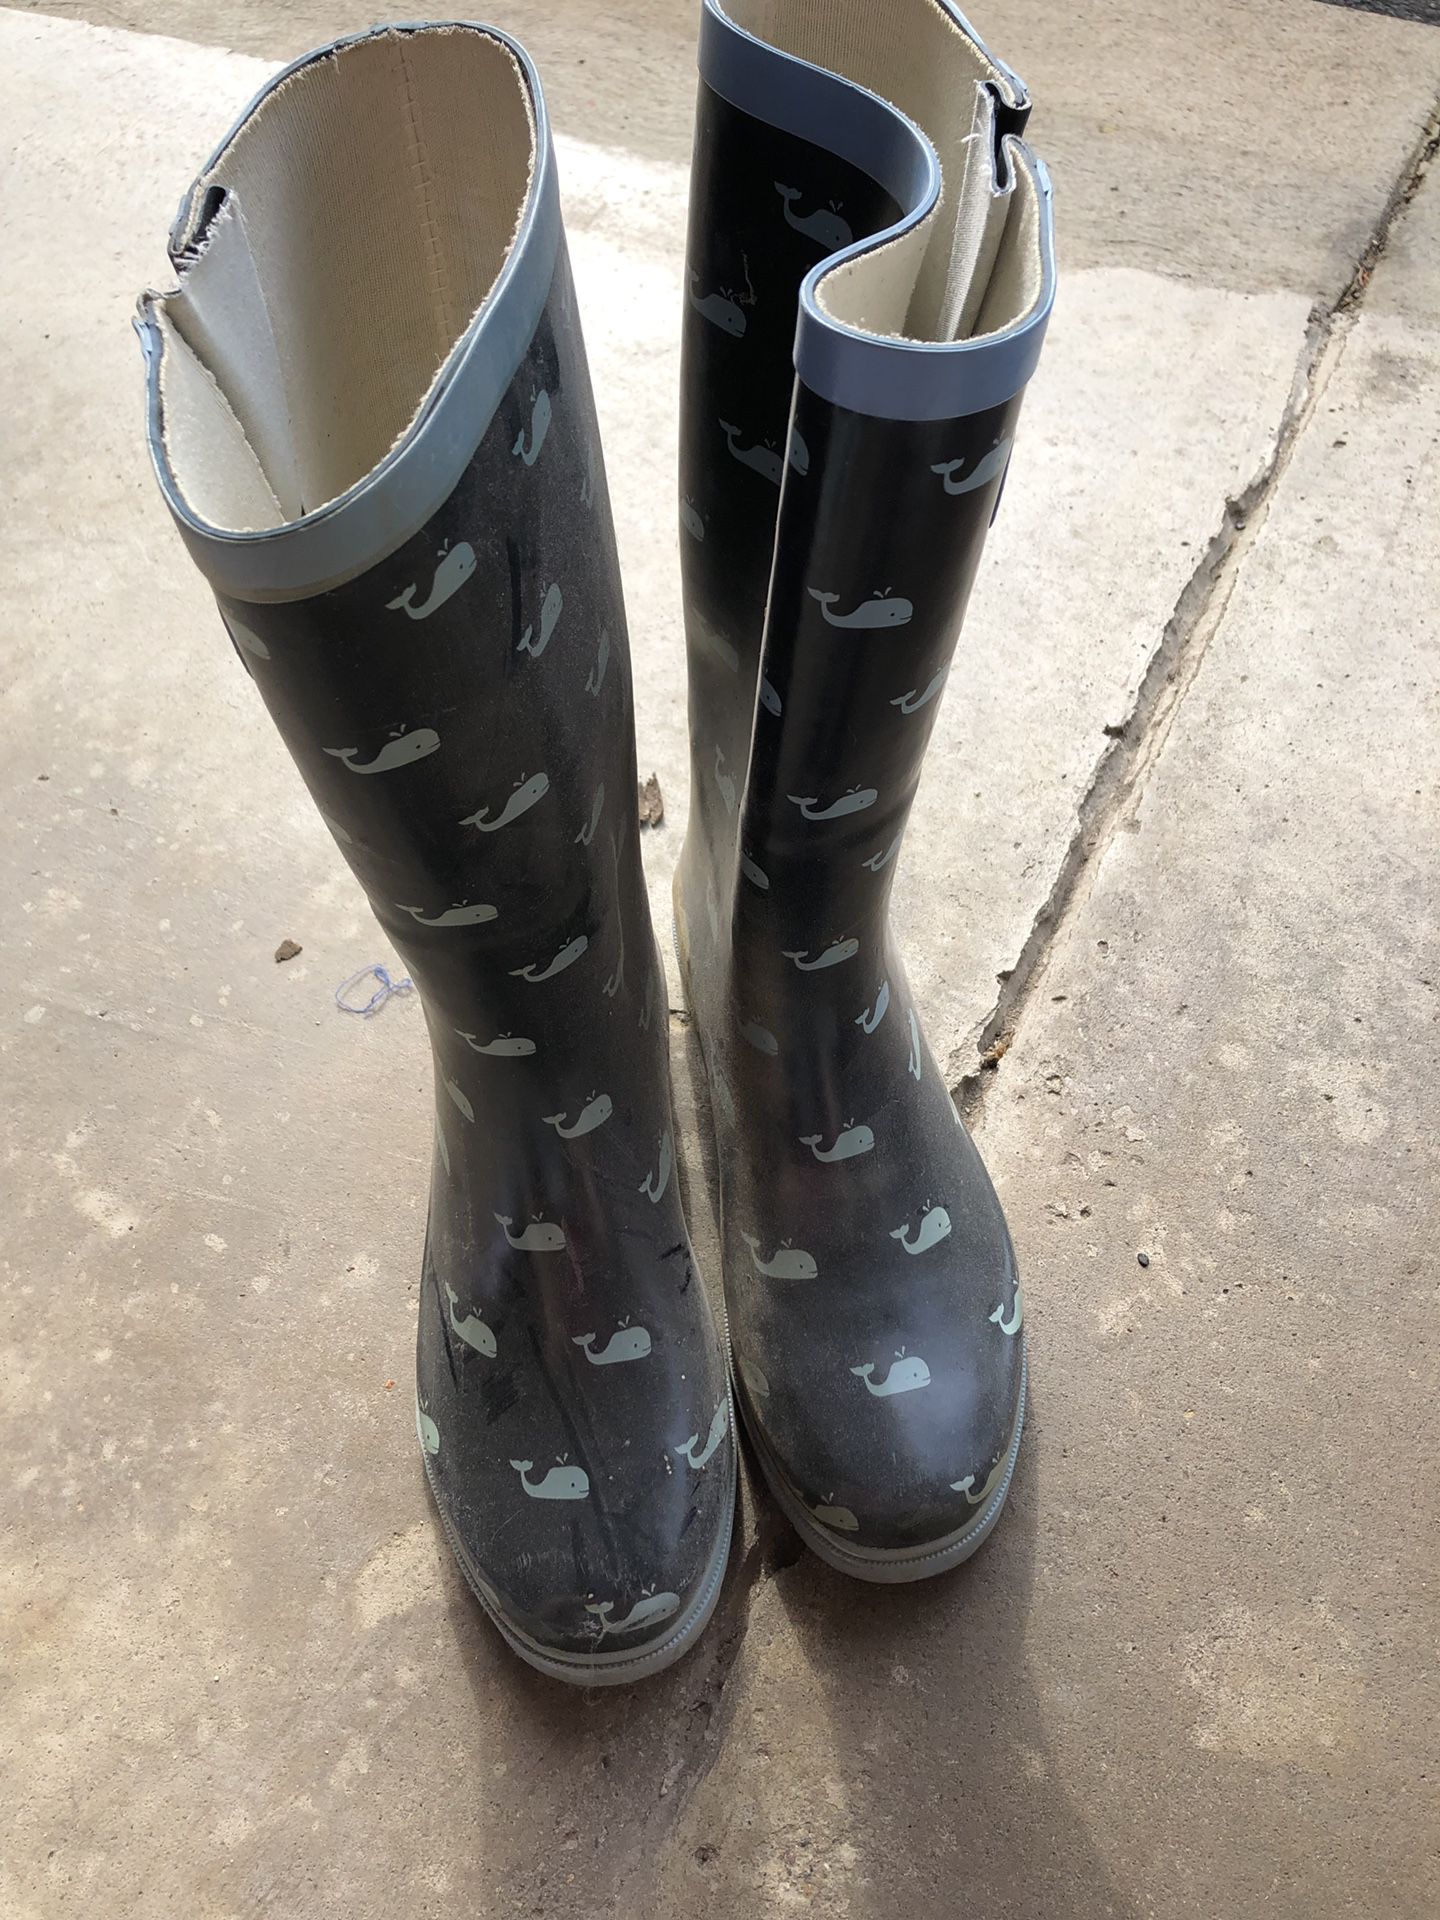 Dolphin rain boots women’s size 7.5